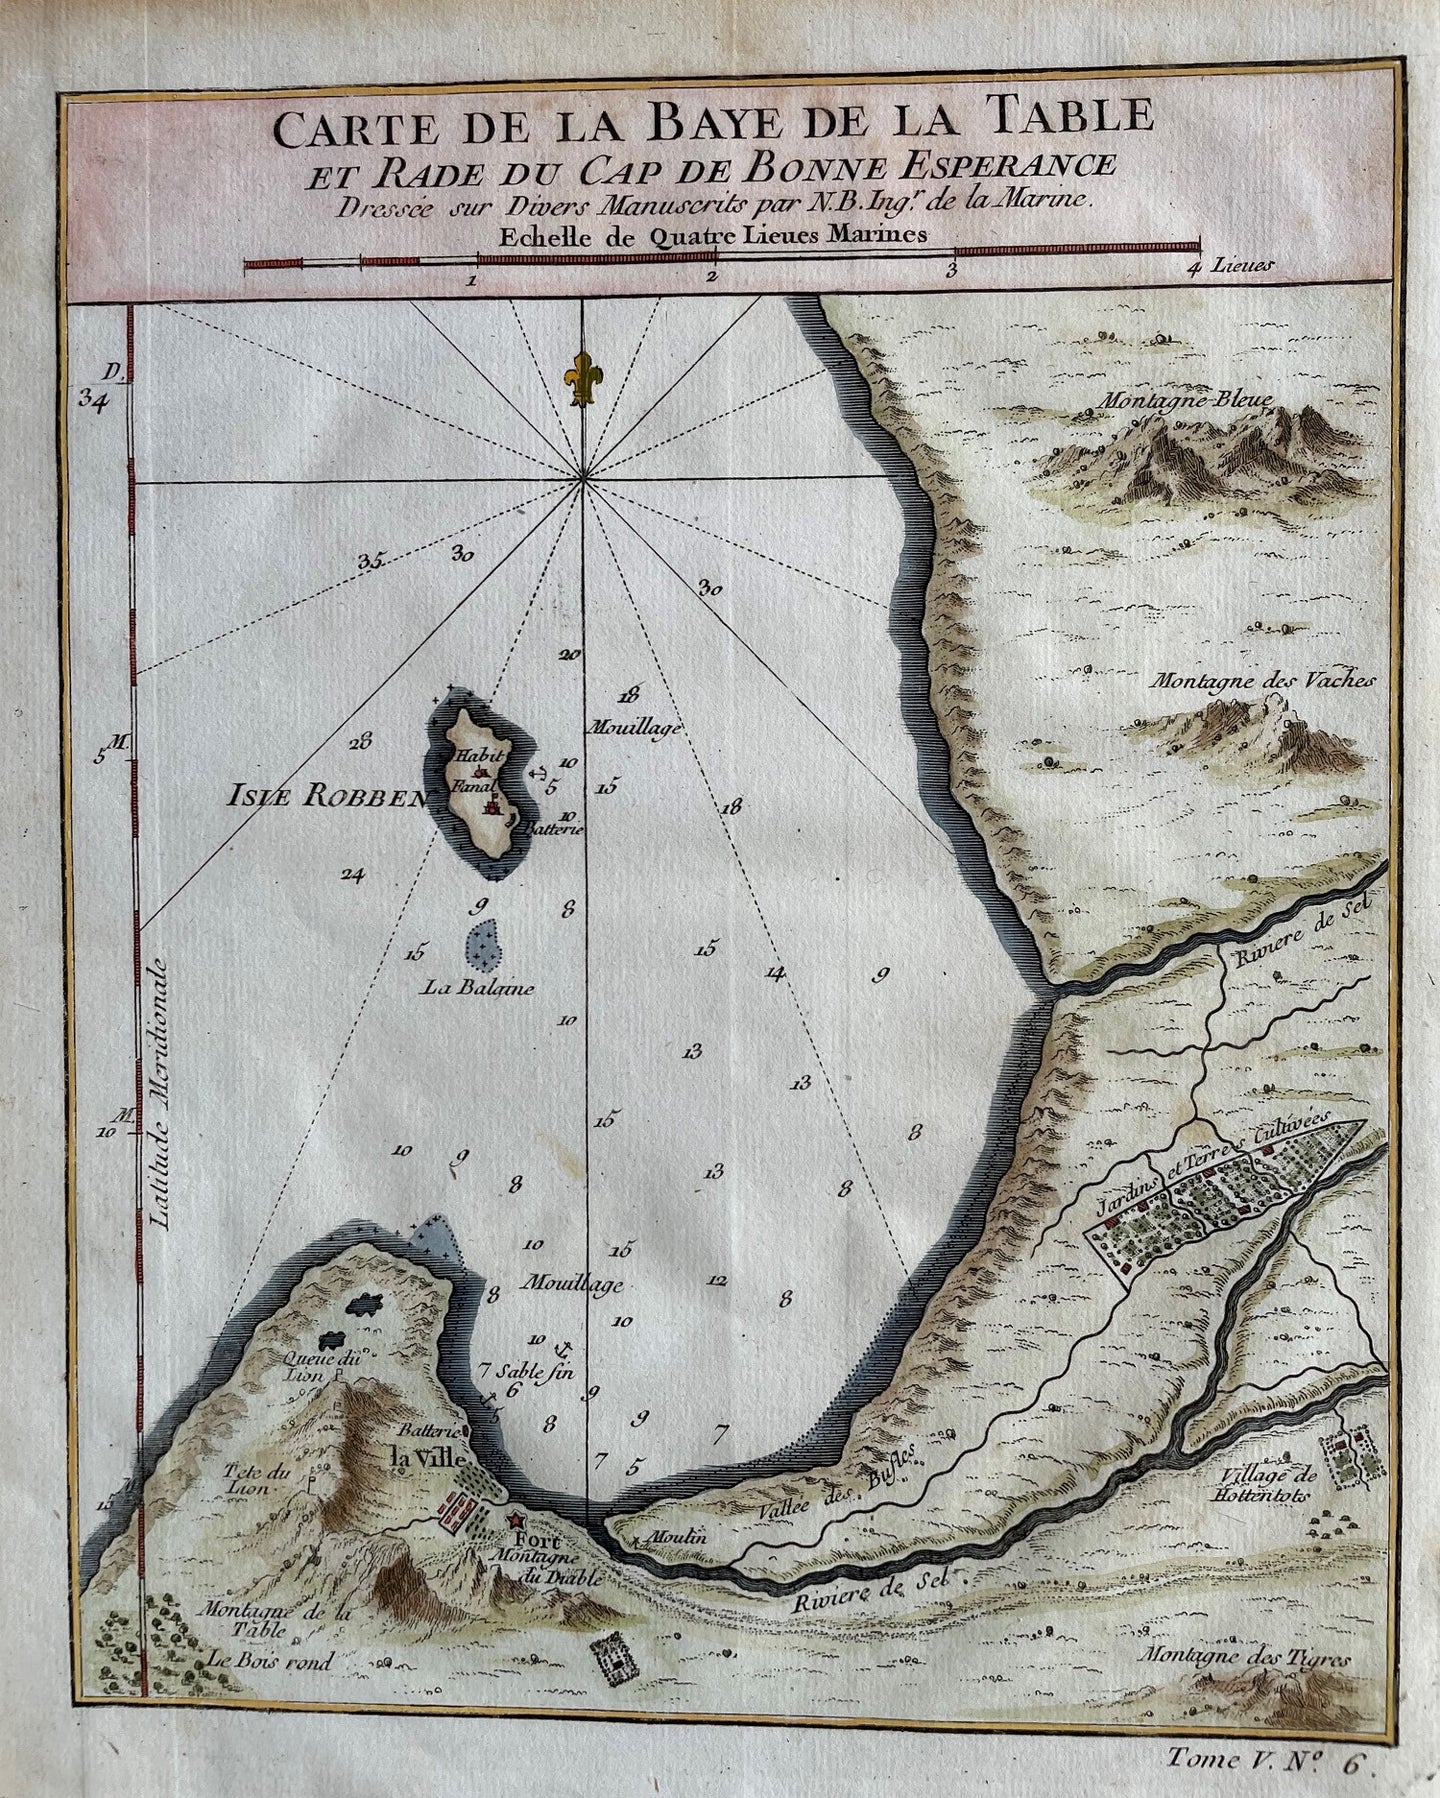 Zuid-Afrika Kaapstad Tafelbaai Robbeneiland South Africa Cape Town Table Bay Robben Island - JN Bellin - circa 1755